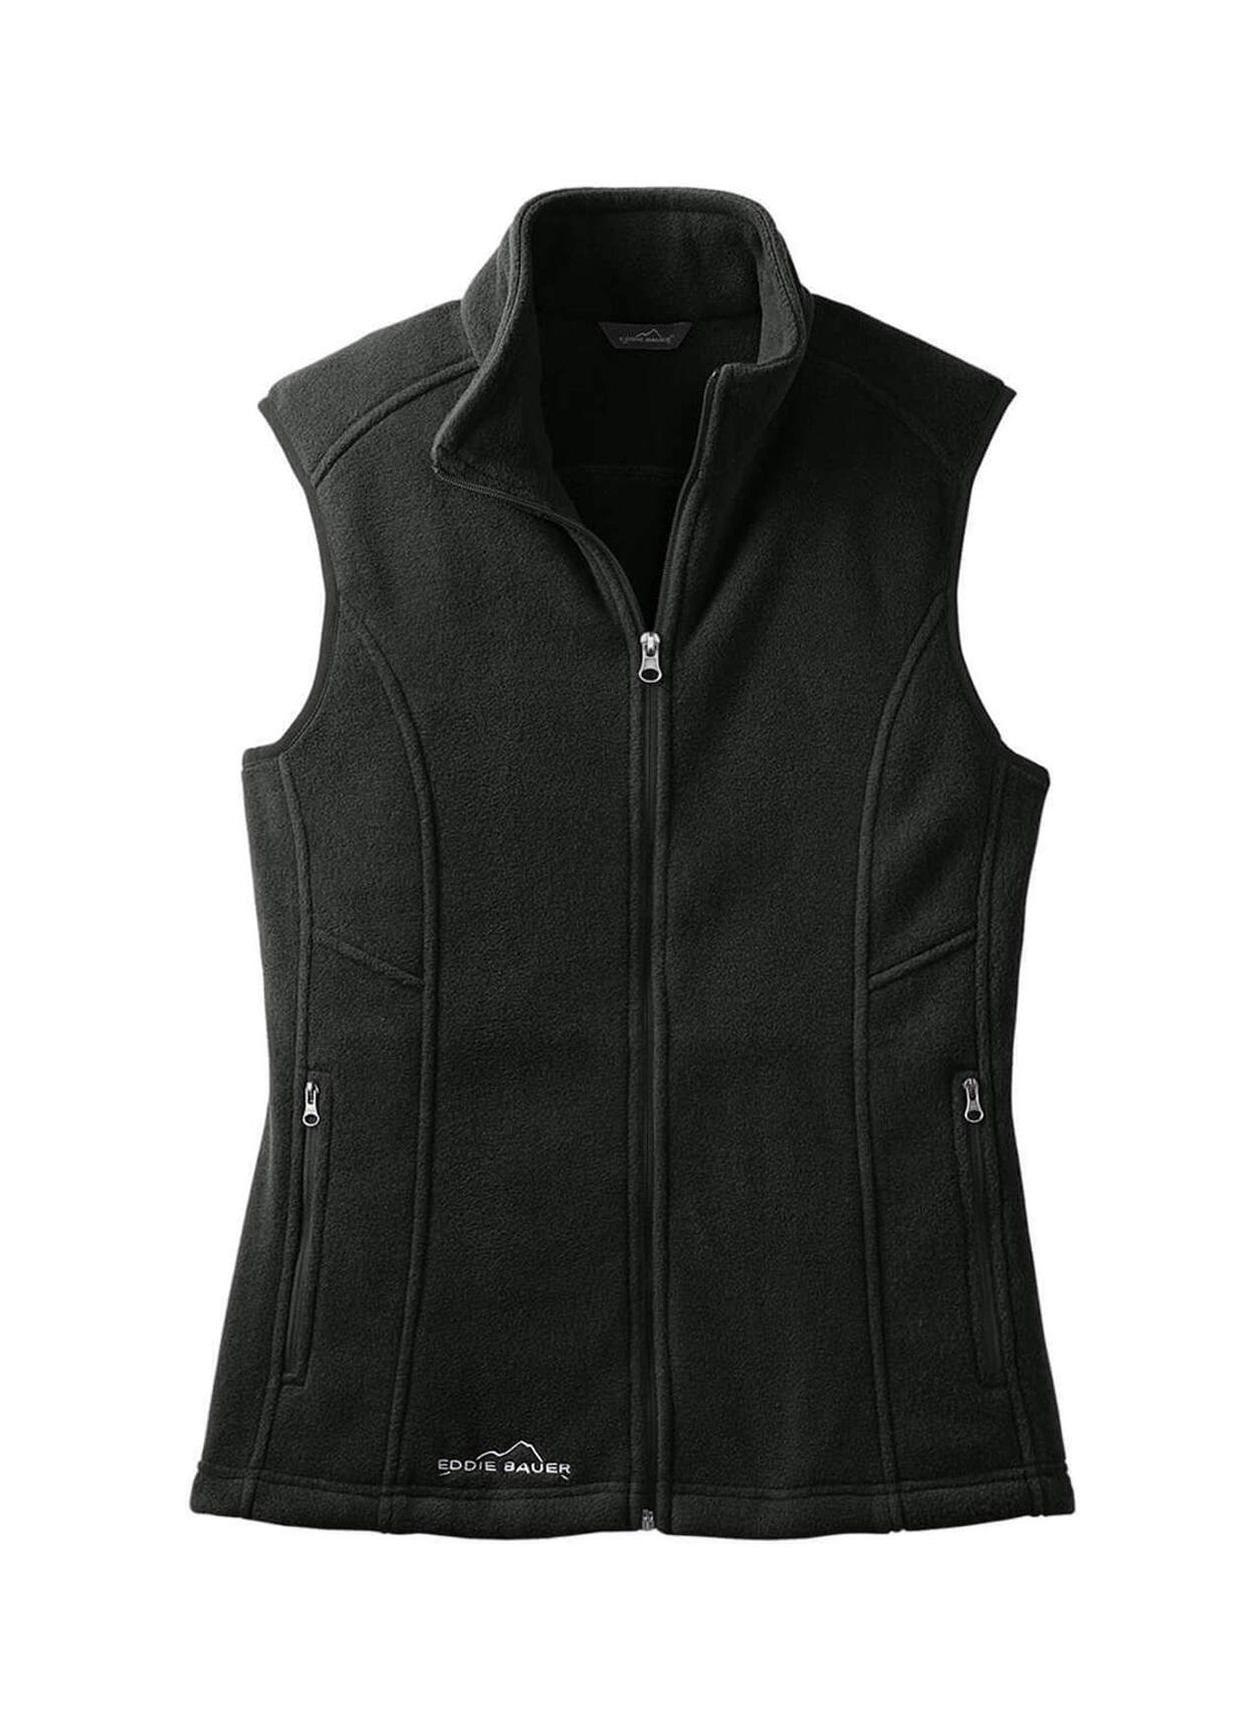 Eddie Bauer Black Women's Fleece Vest